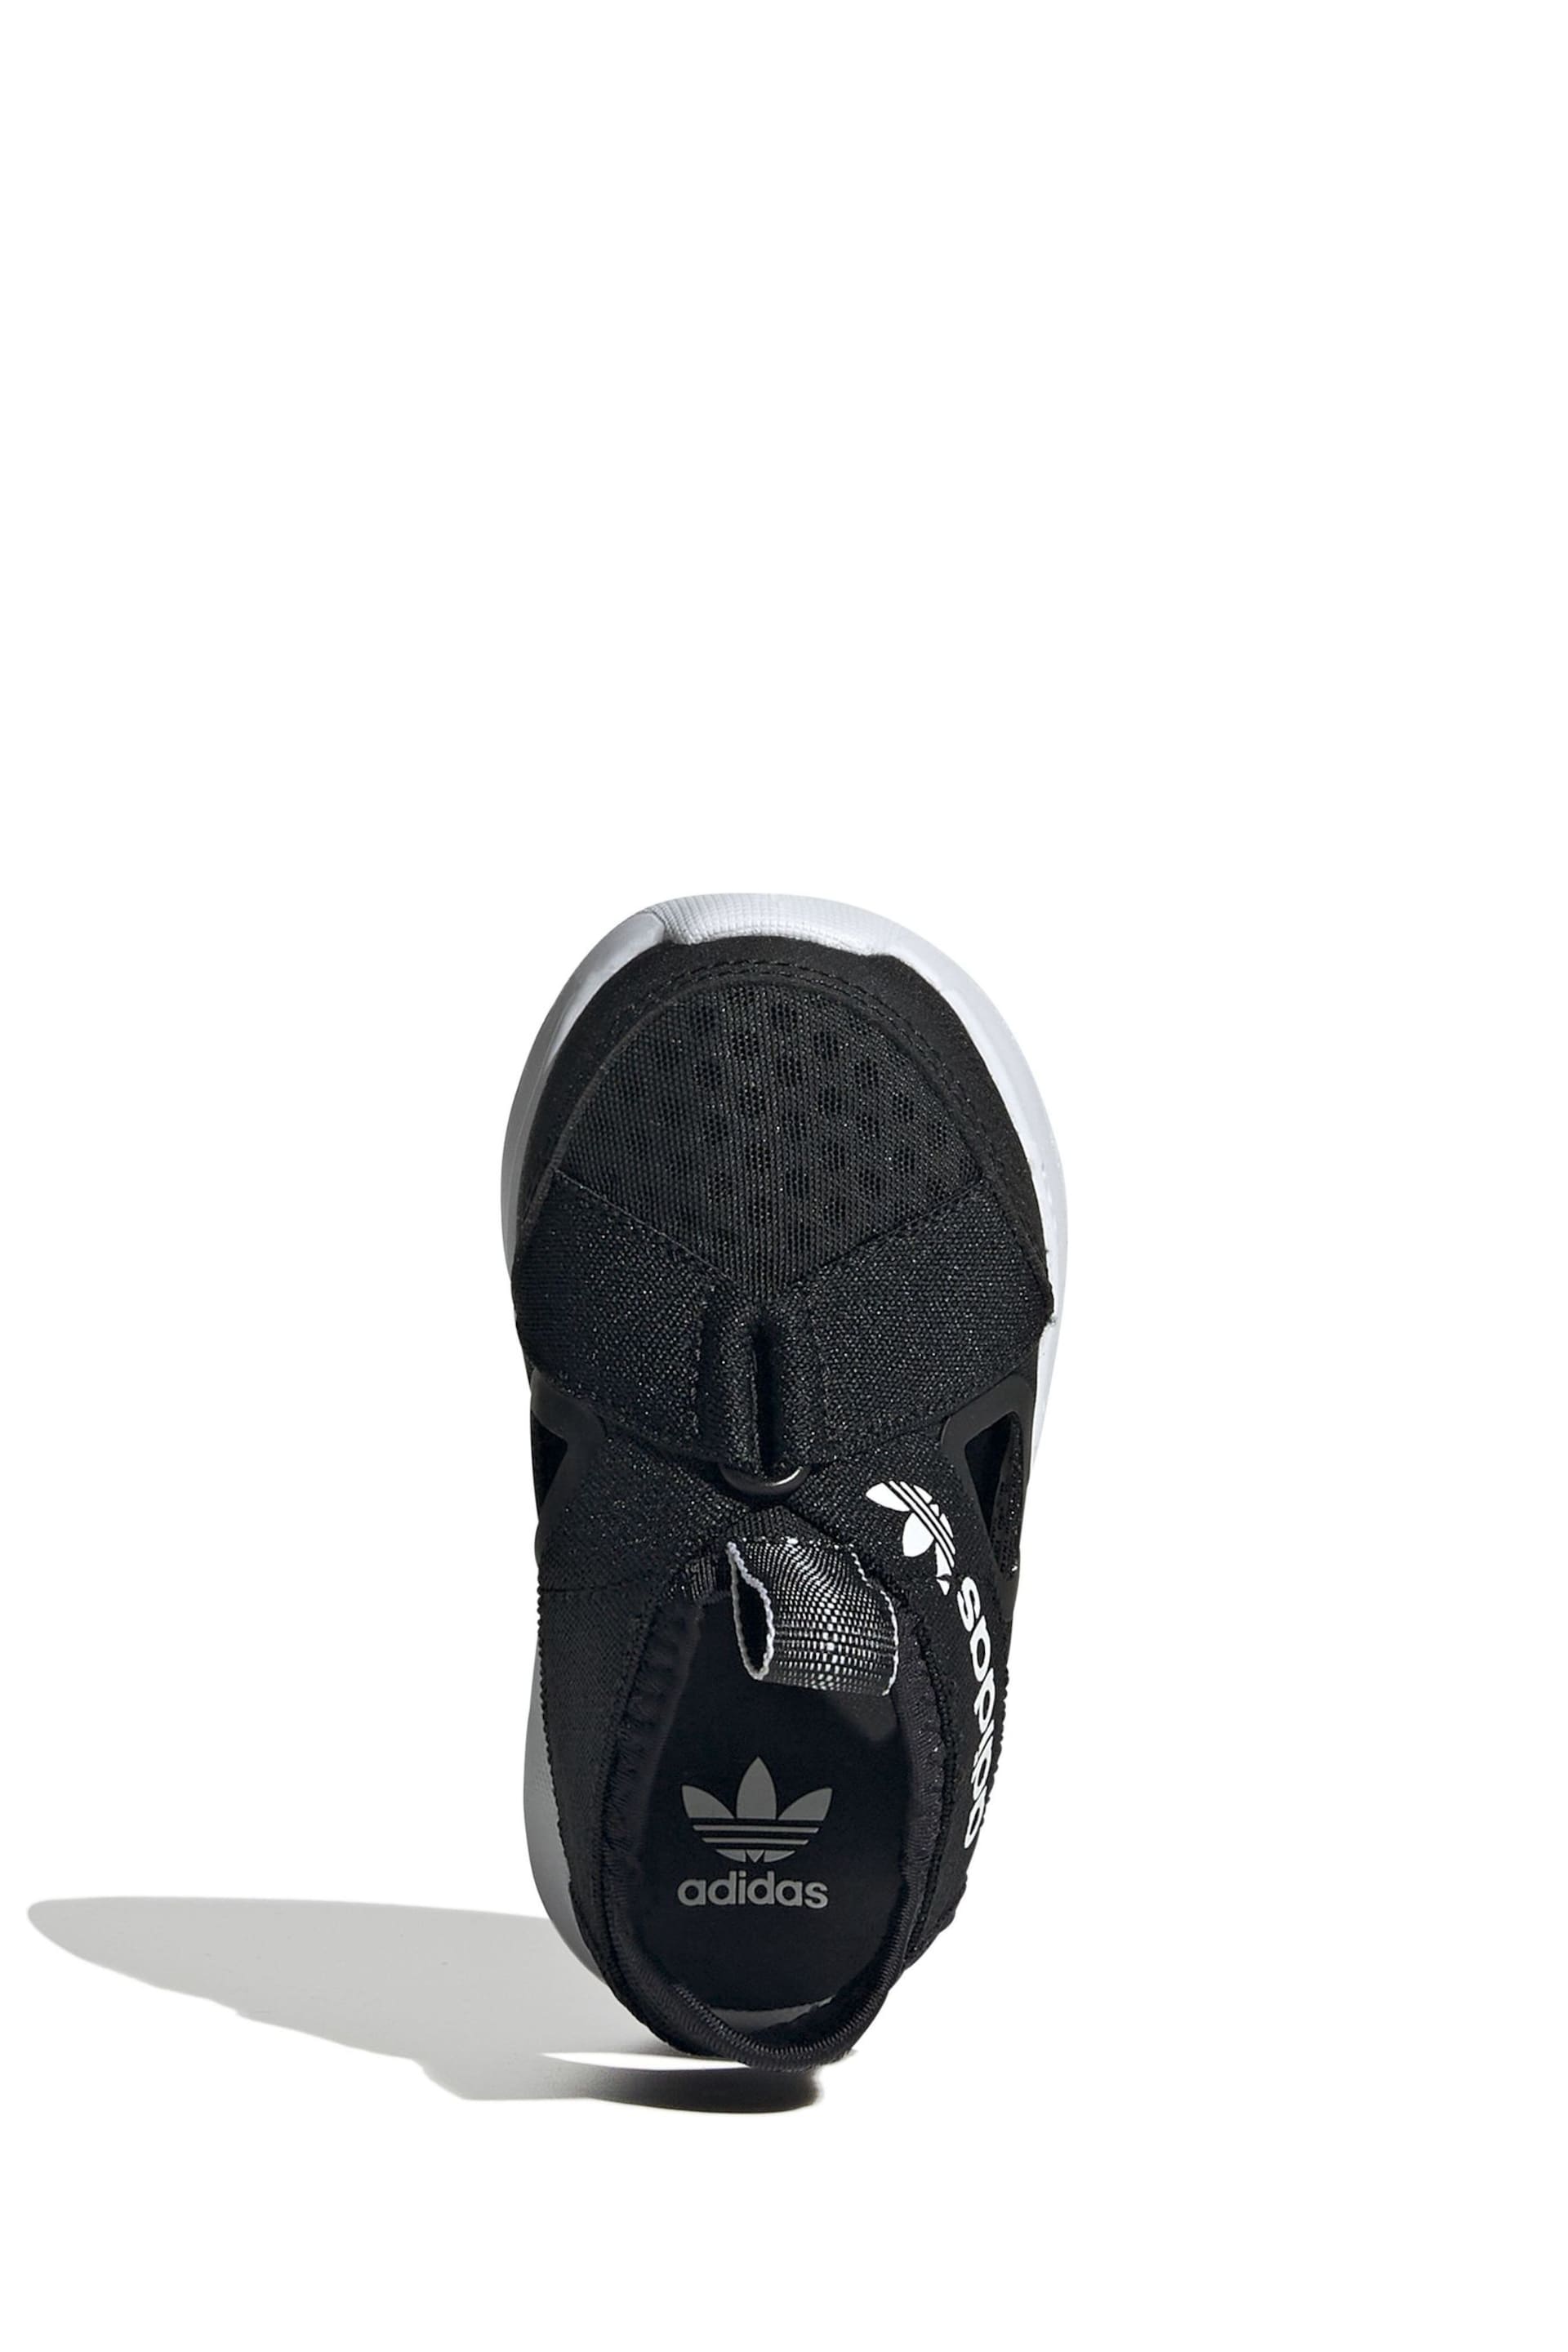 adidas Originals 360 Infant Black Sandals - Image 6 of 8